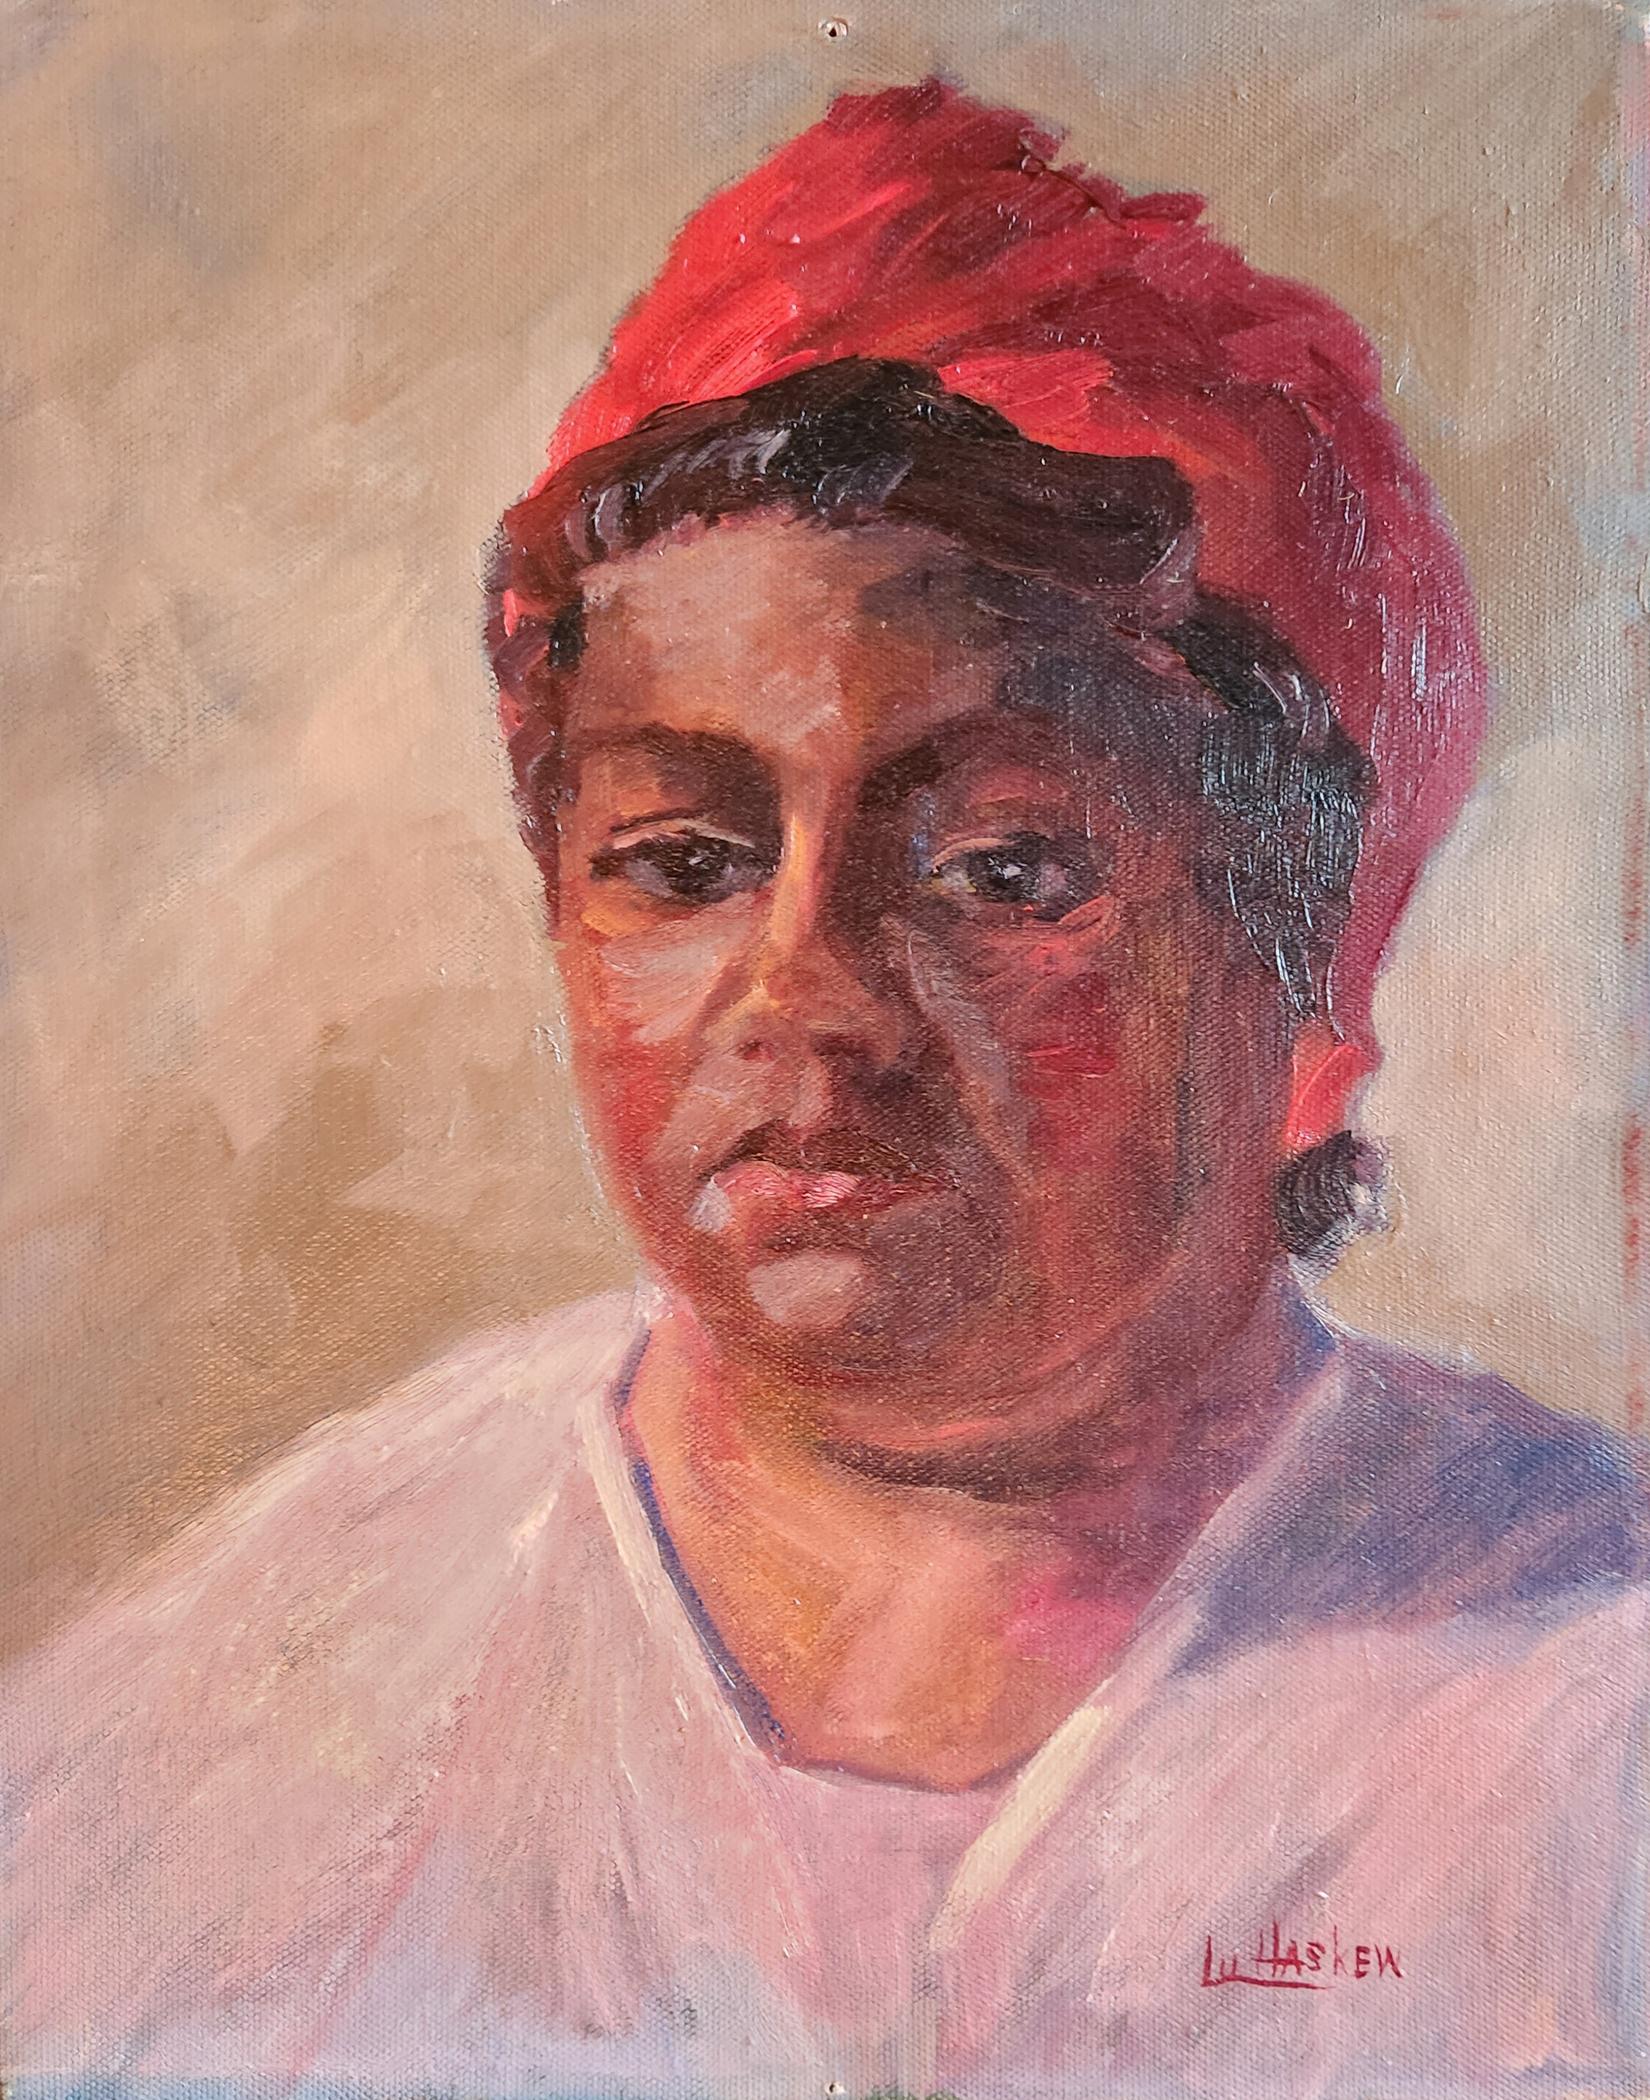 Lu Haskew Figurative Painting – Honor der schwarzen Frau, 14x11", Öl auf Karton